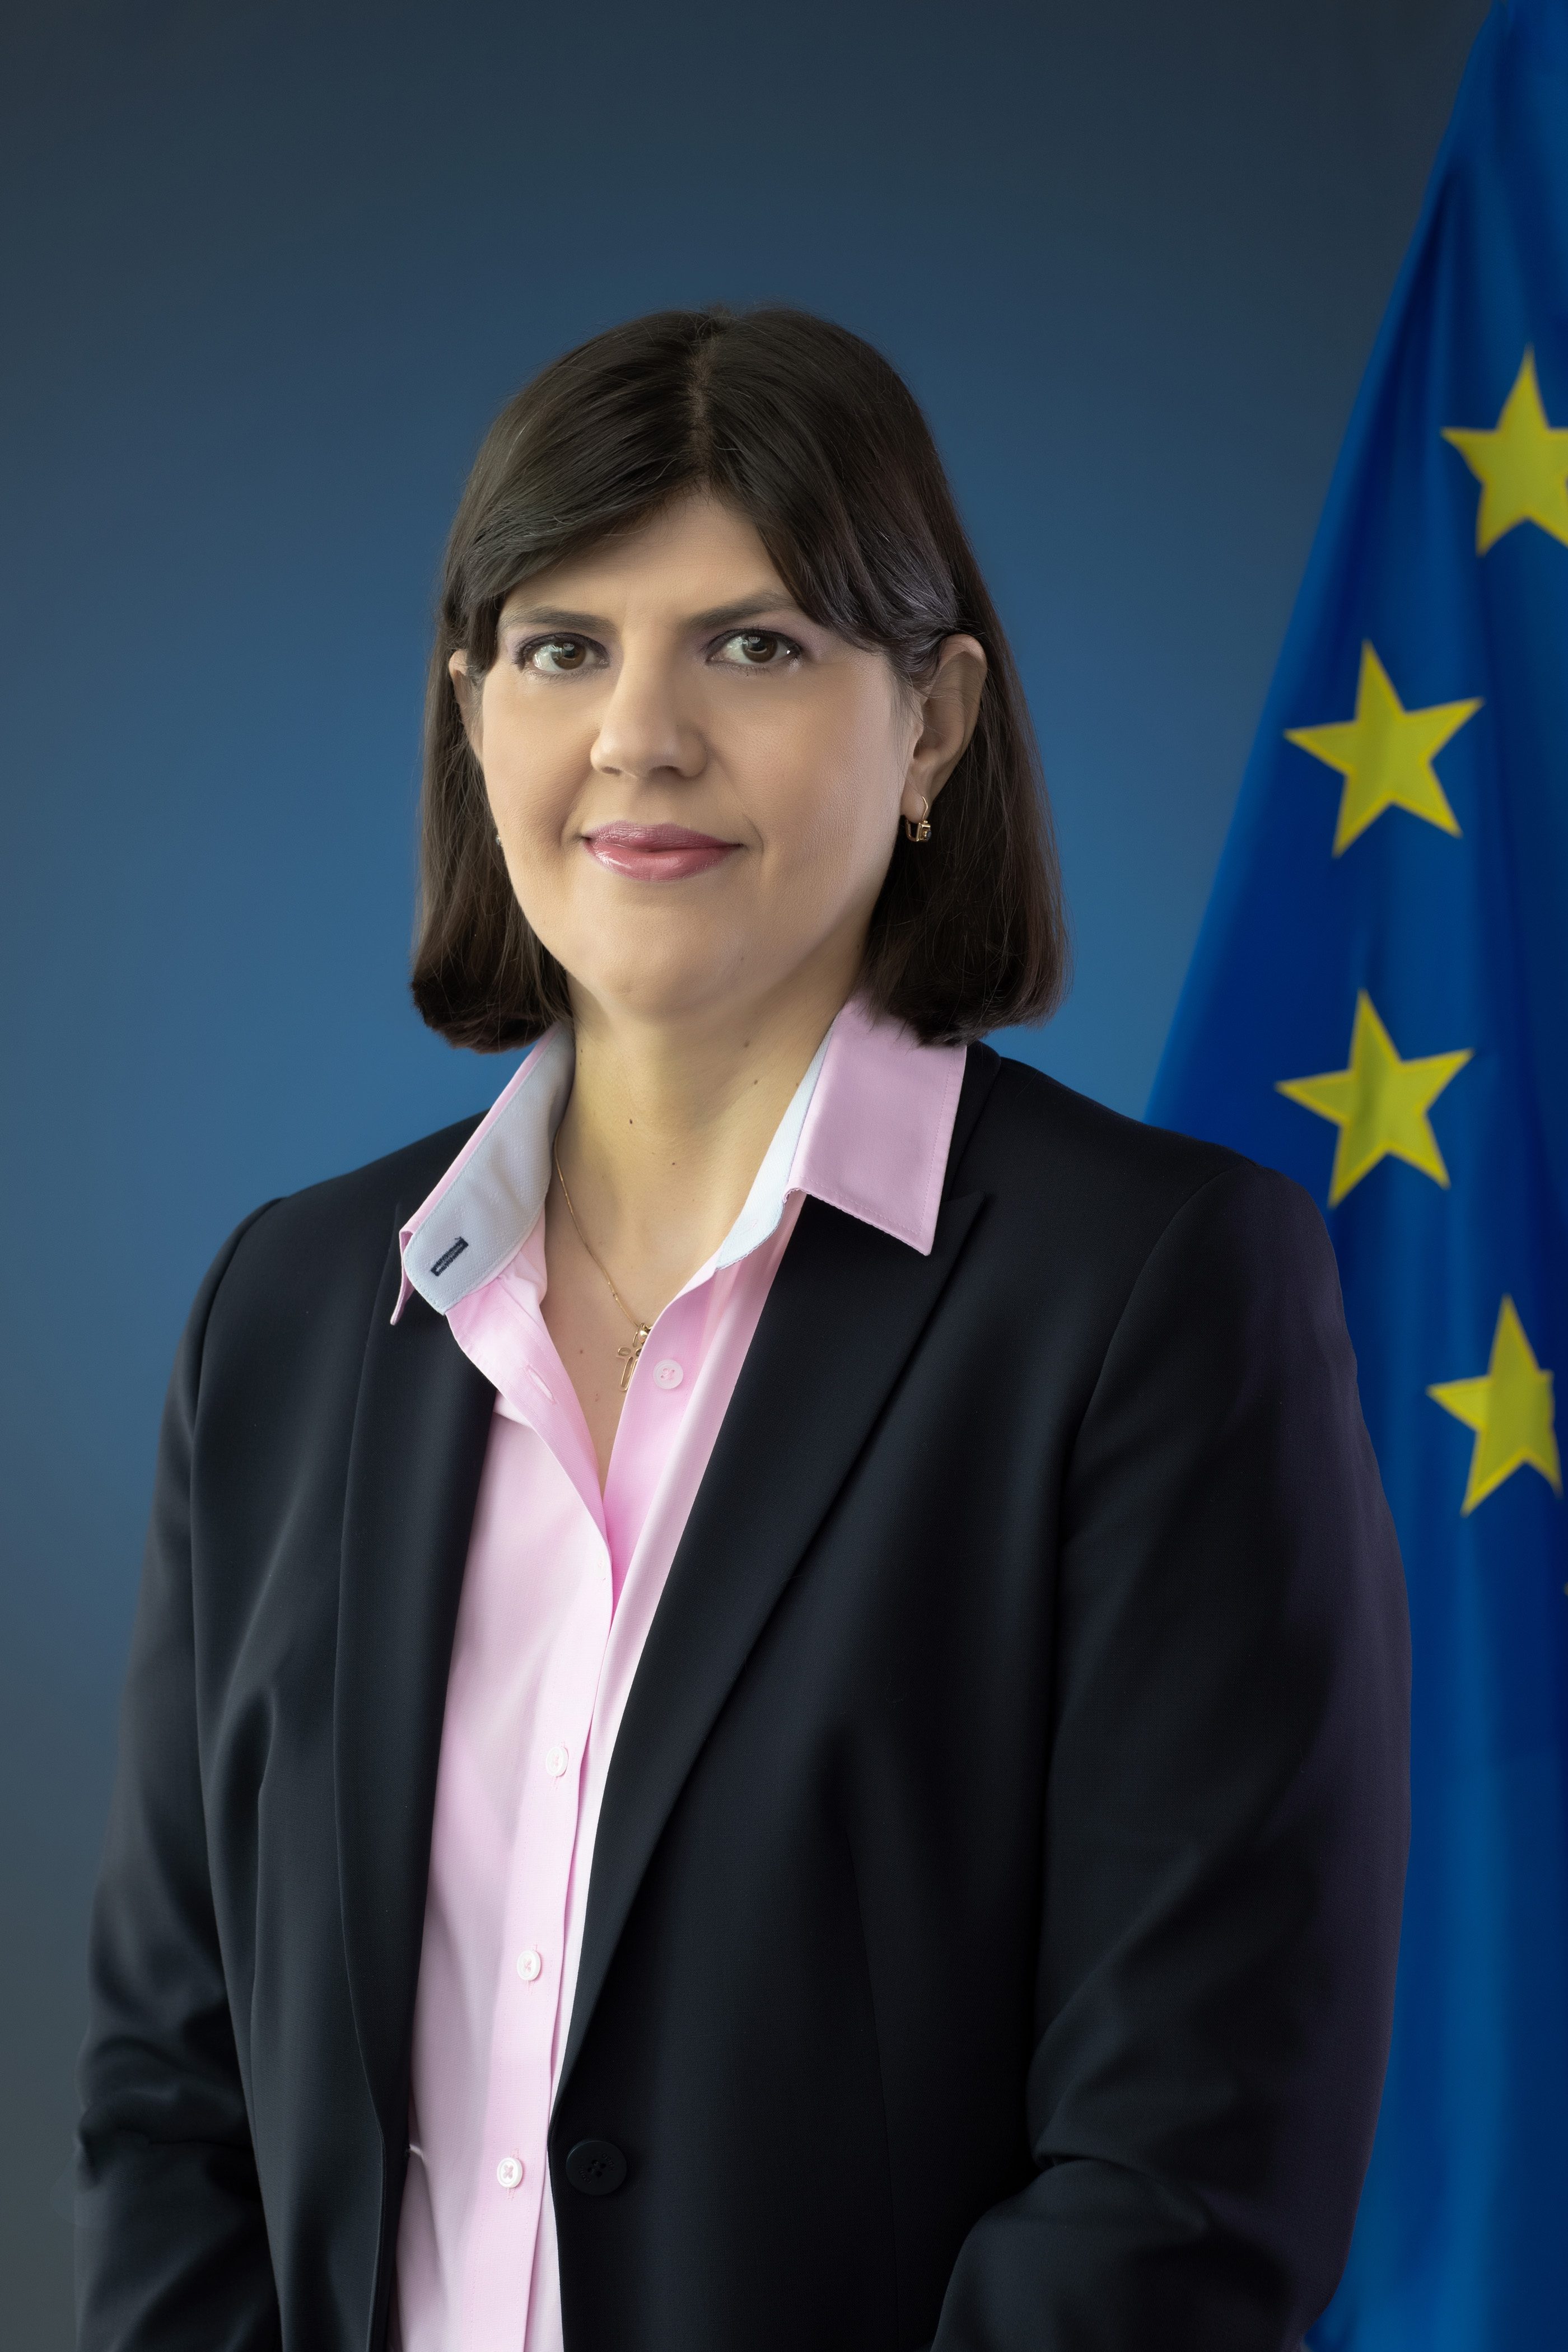 Il procuratore capo Laura Codruța Kövesi
(Foto © European Public Prosecutor's Office)